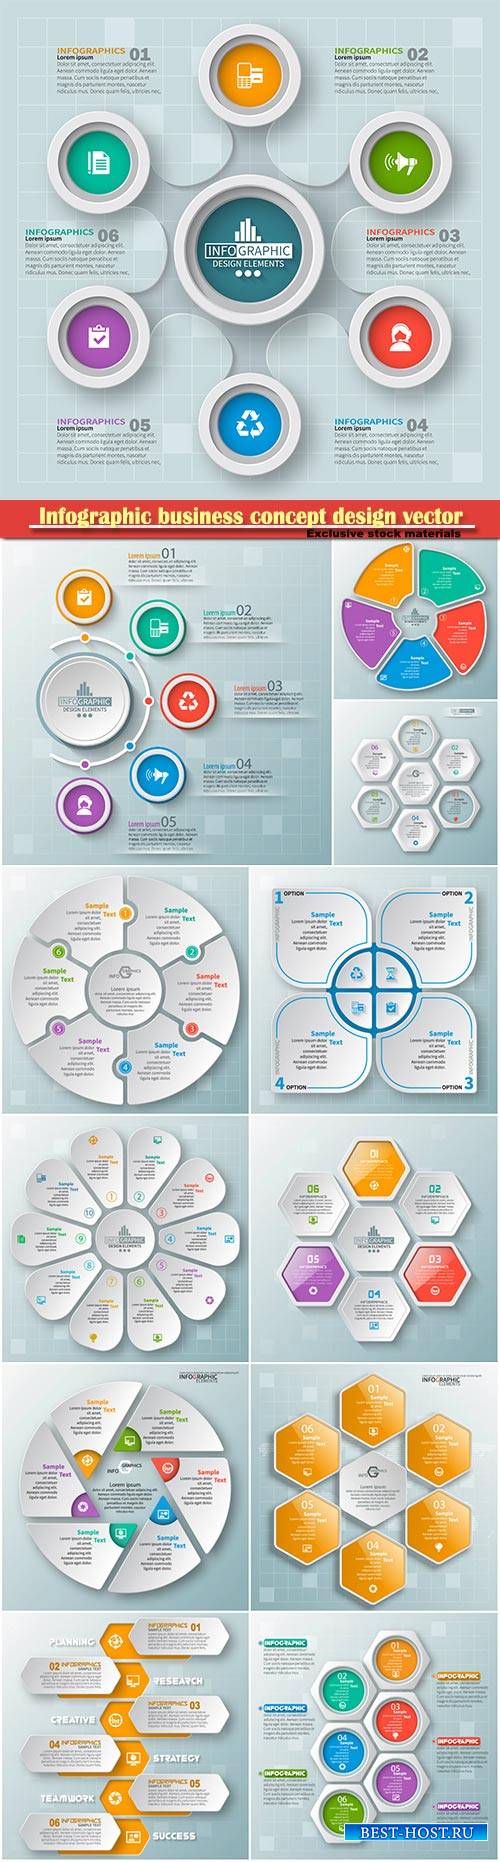 Infographic business concept design vector illustration # 3